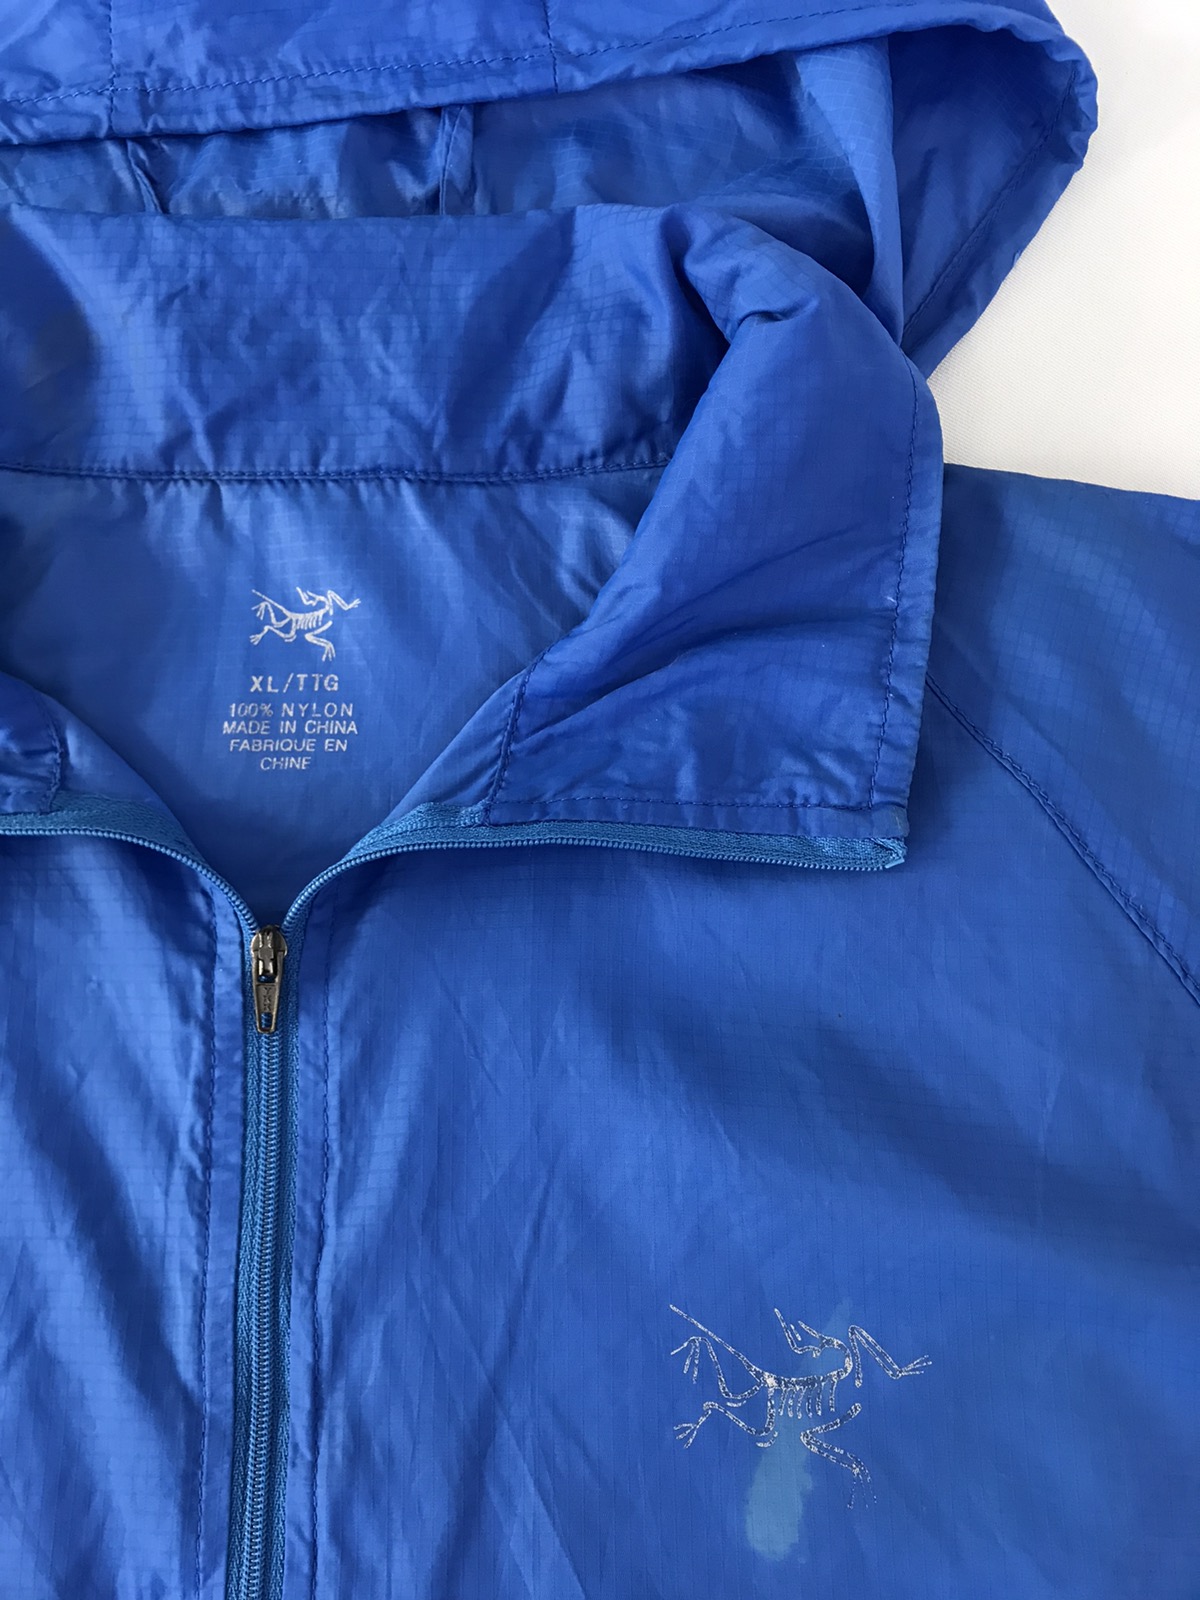 Arcteryx Nylon Windbreaker Jacket Zip Up Hoodies - 3